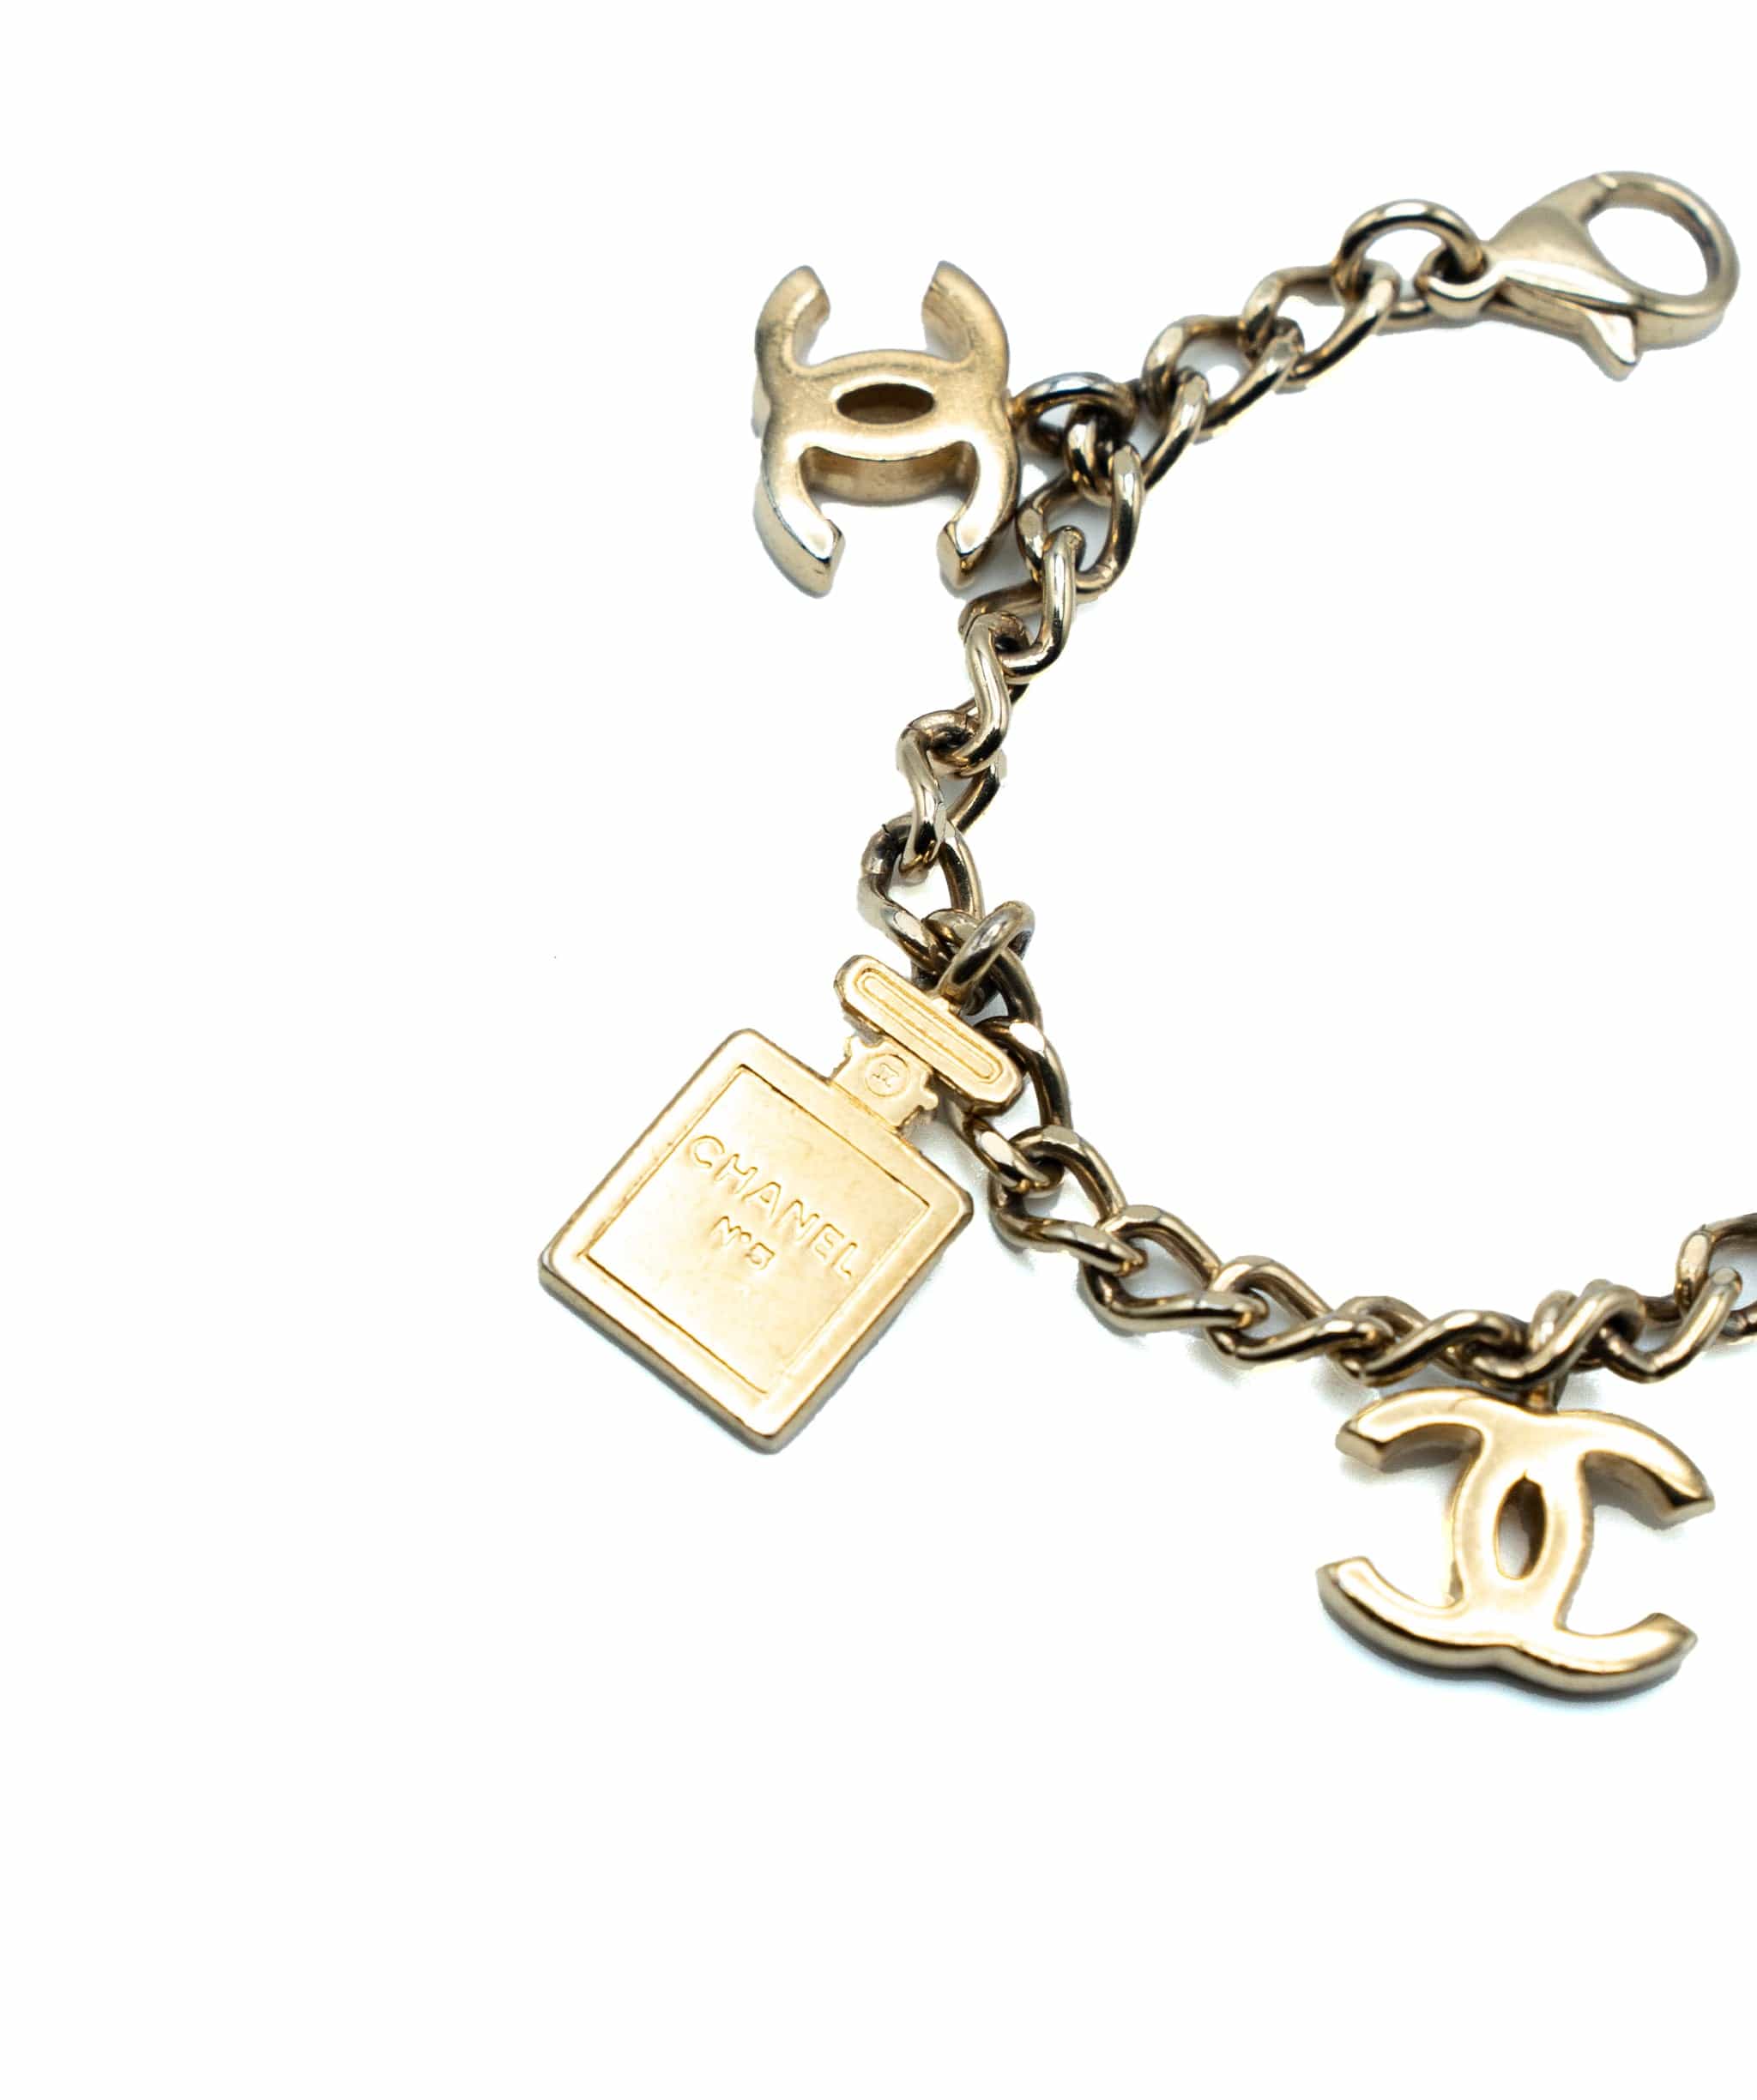 Chanel Chanel 02A Multi Charm Bracelet 65588